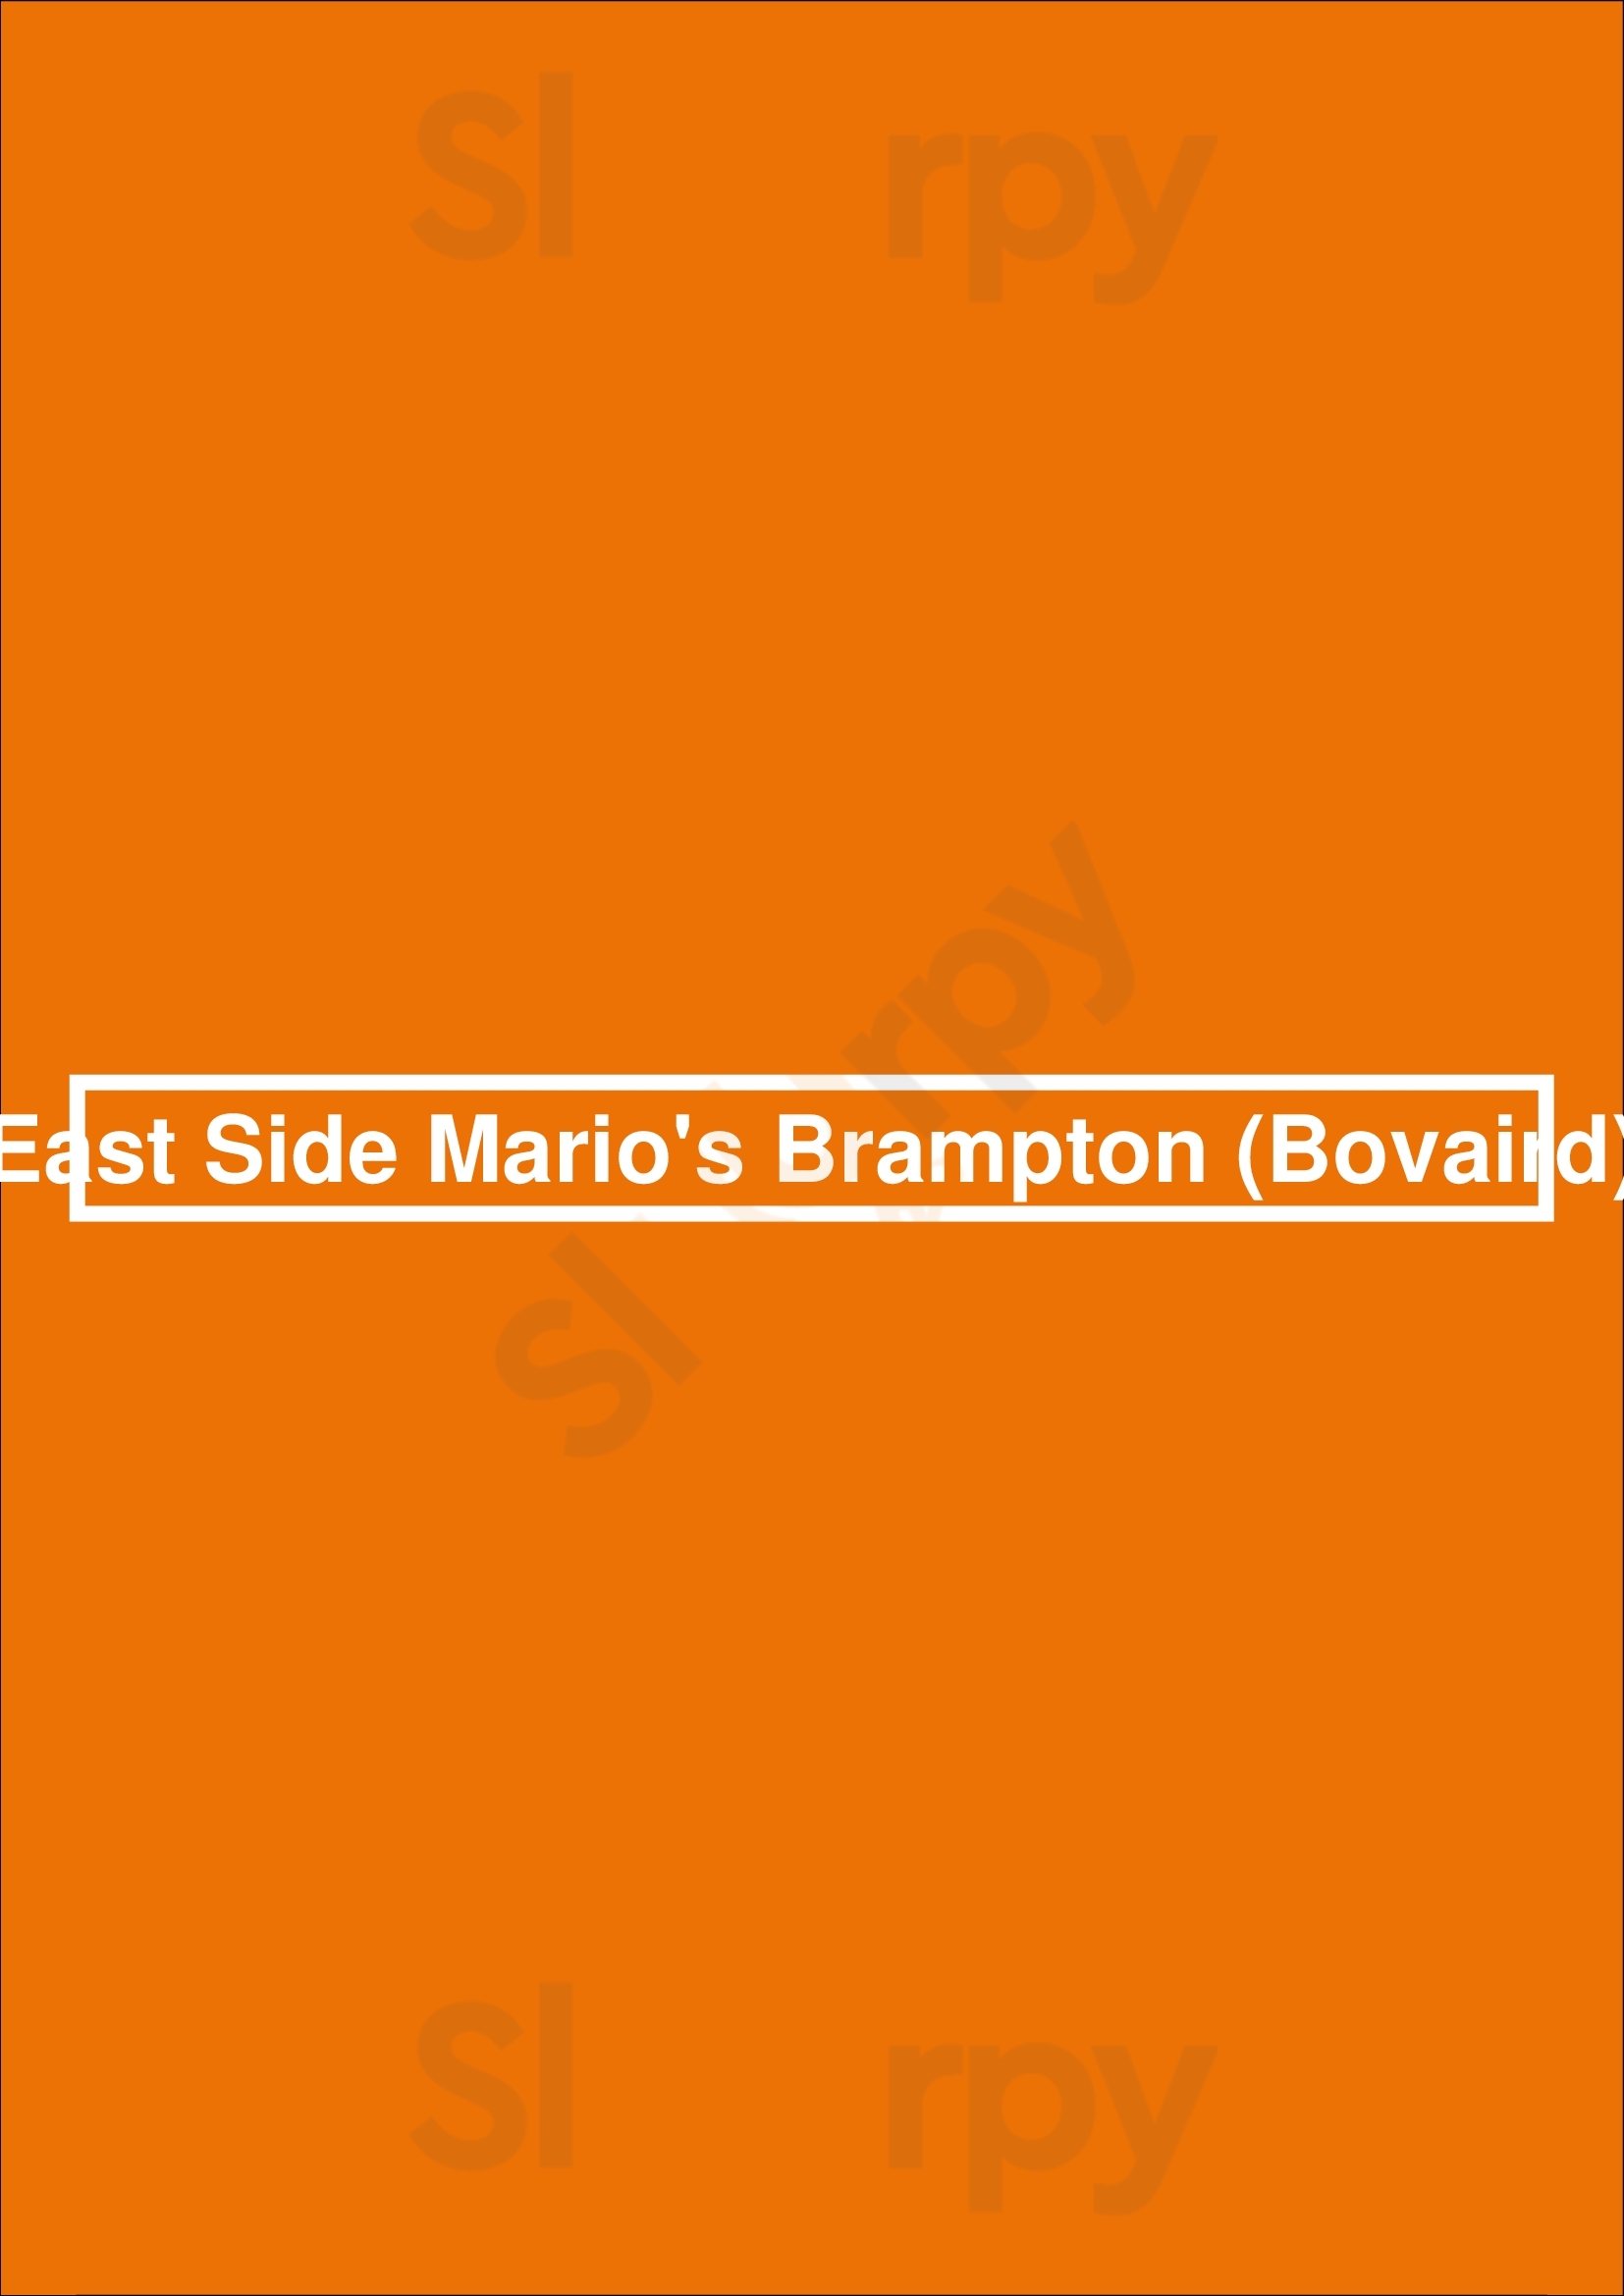 East Side Mario's Brampton Menu - 1